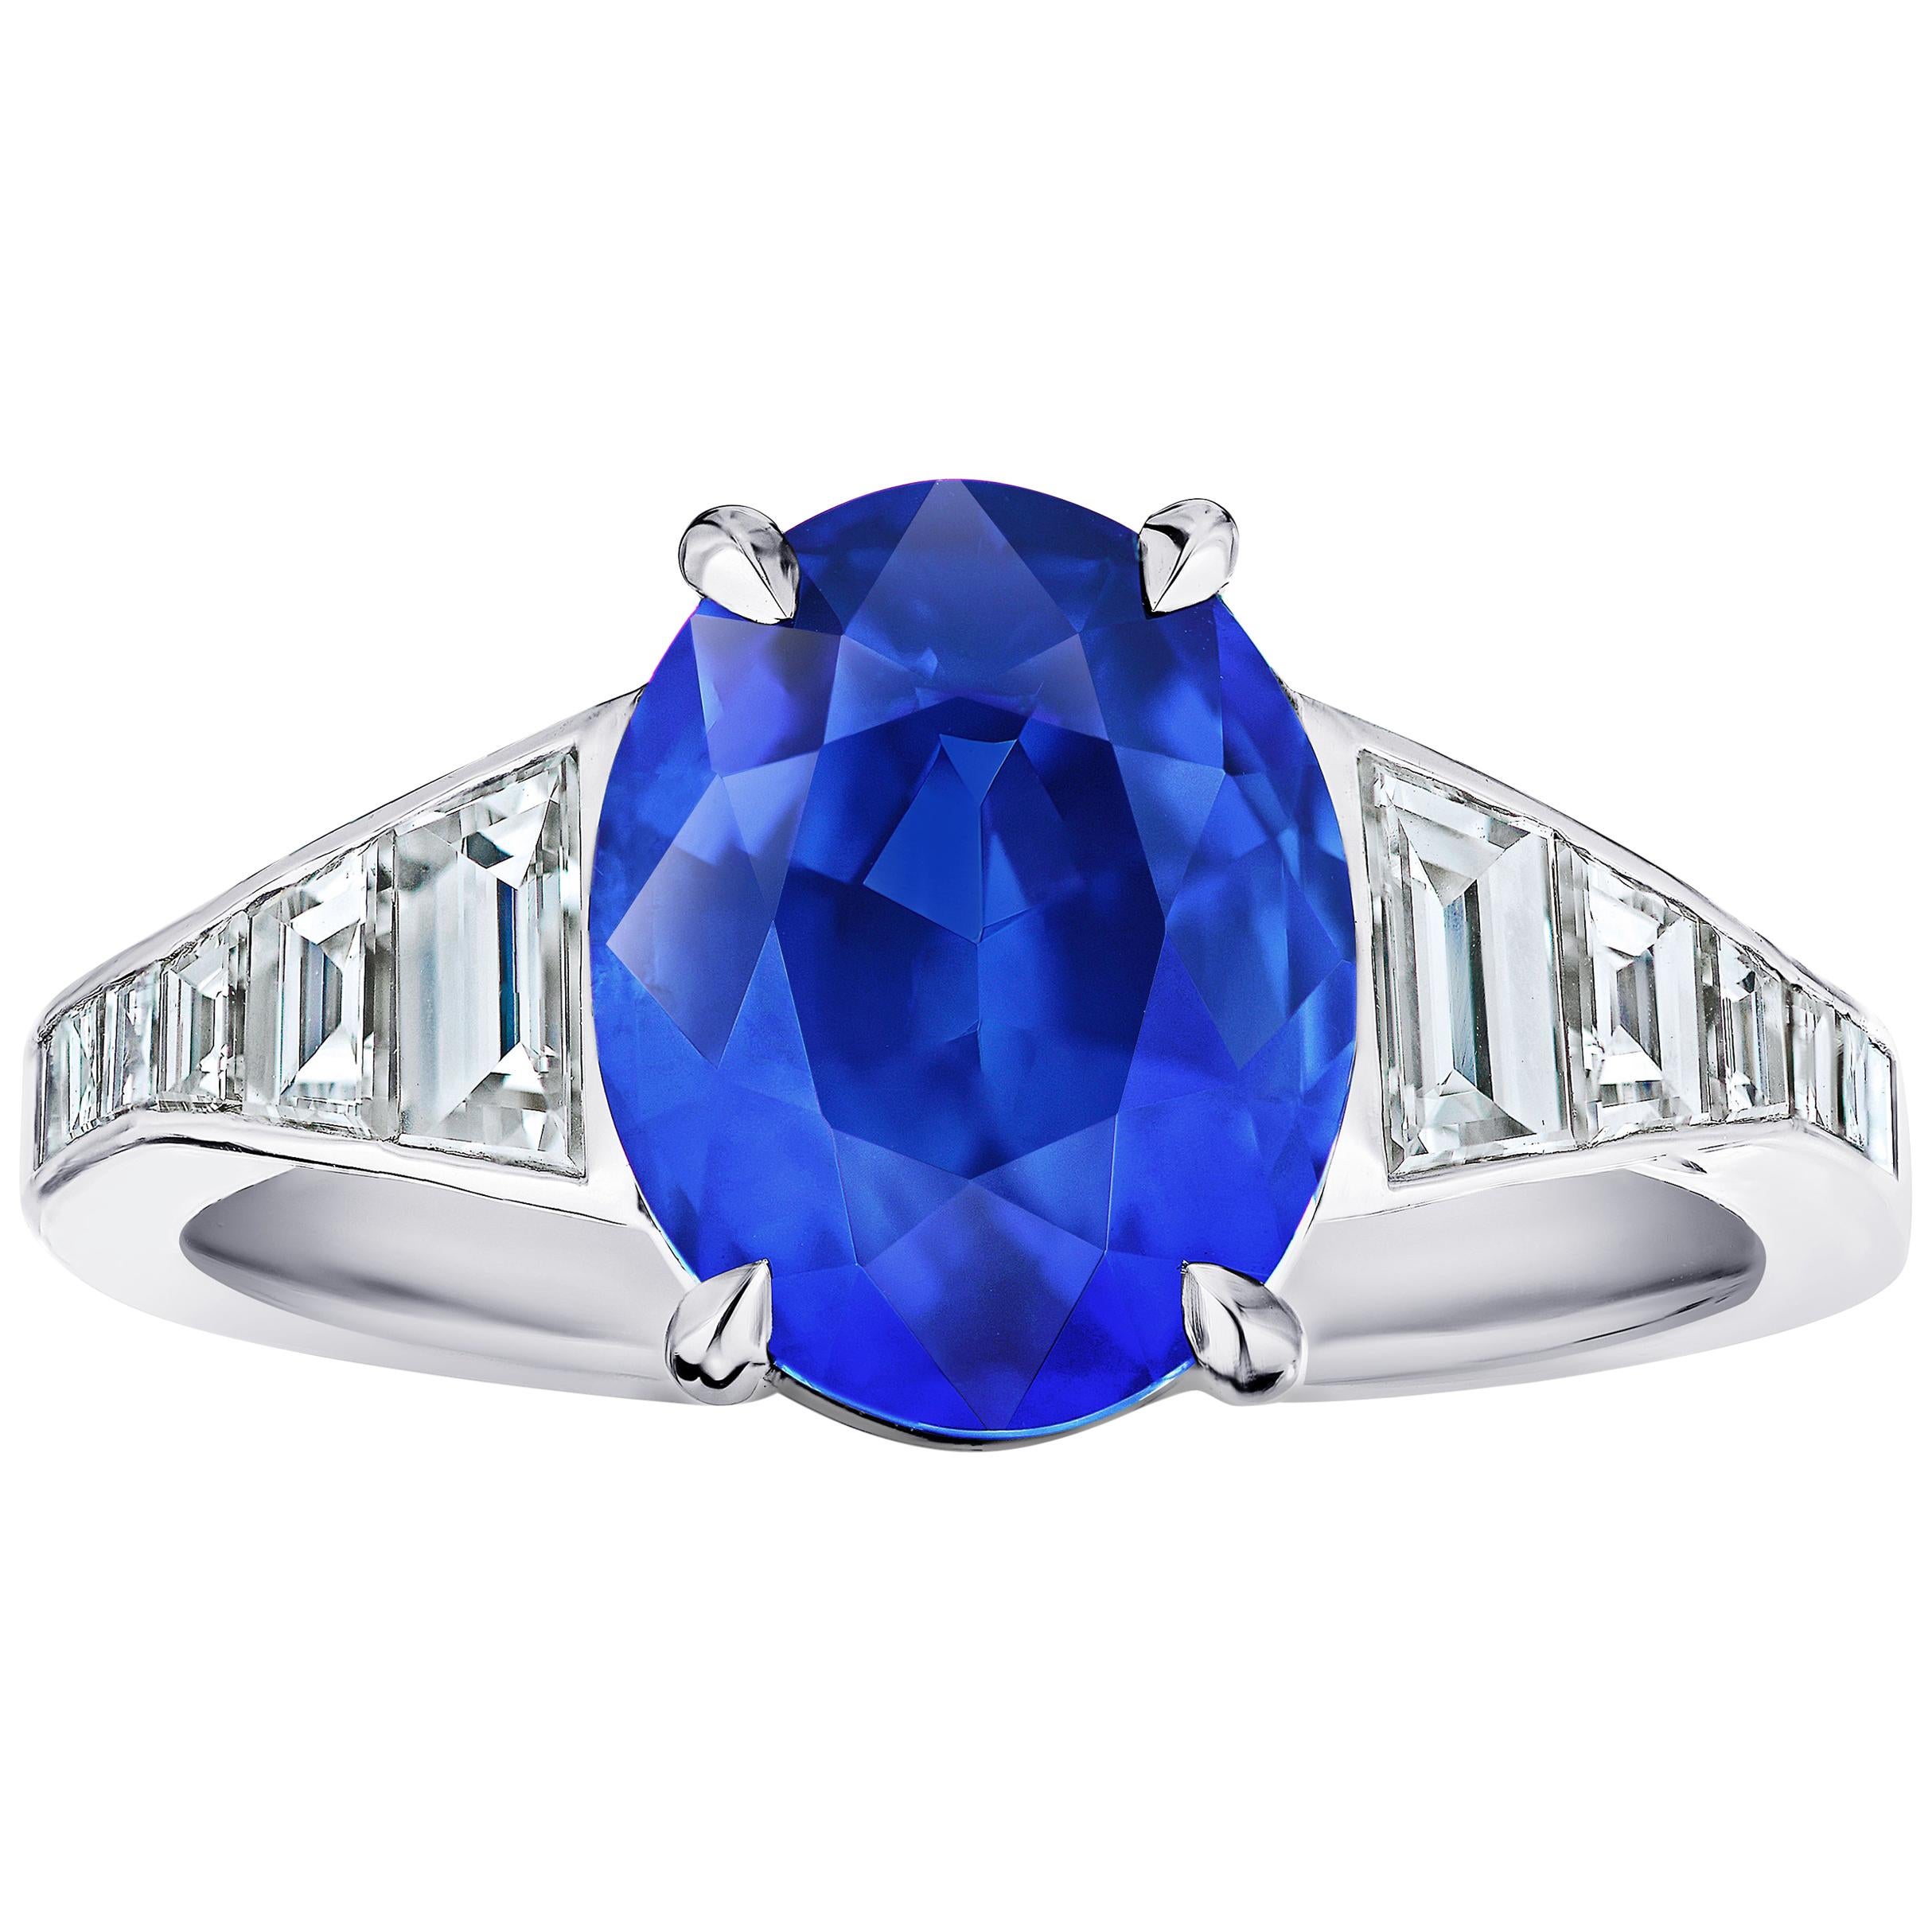 4.91 Carat Oval Blue Sapphire and Diamond Ring